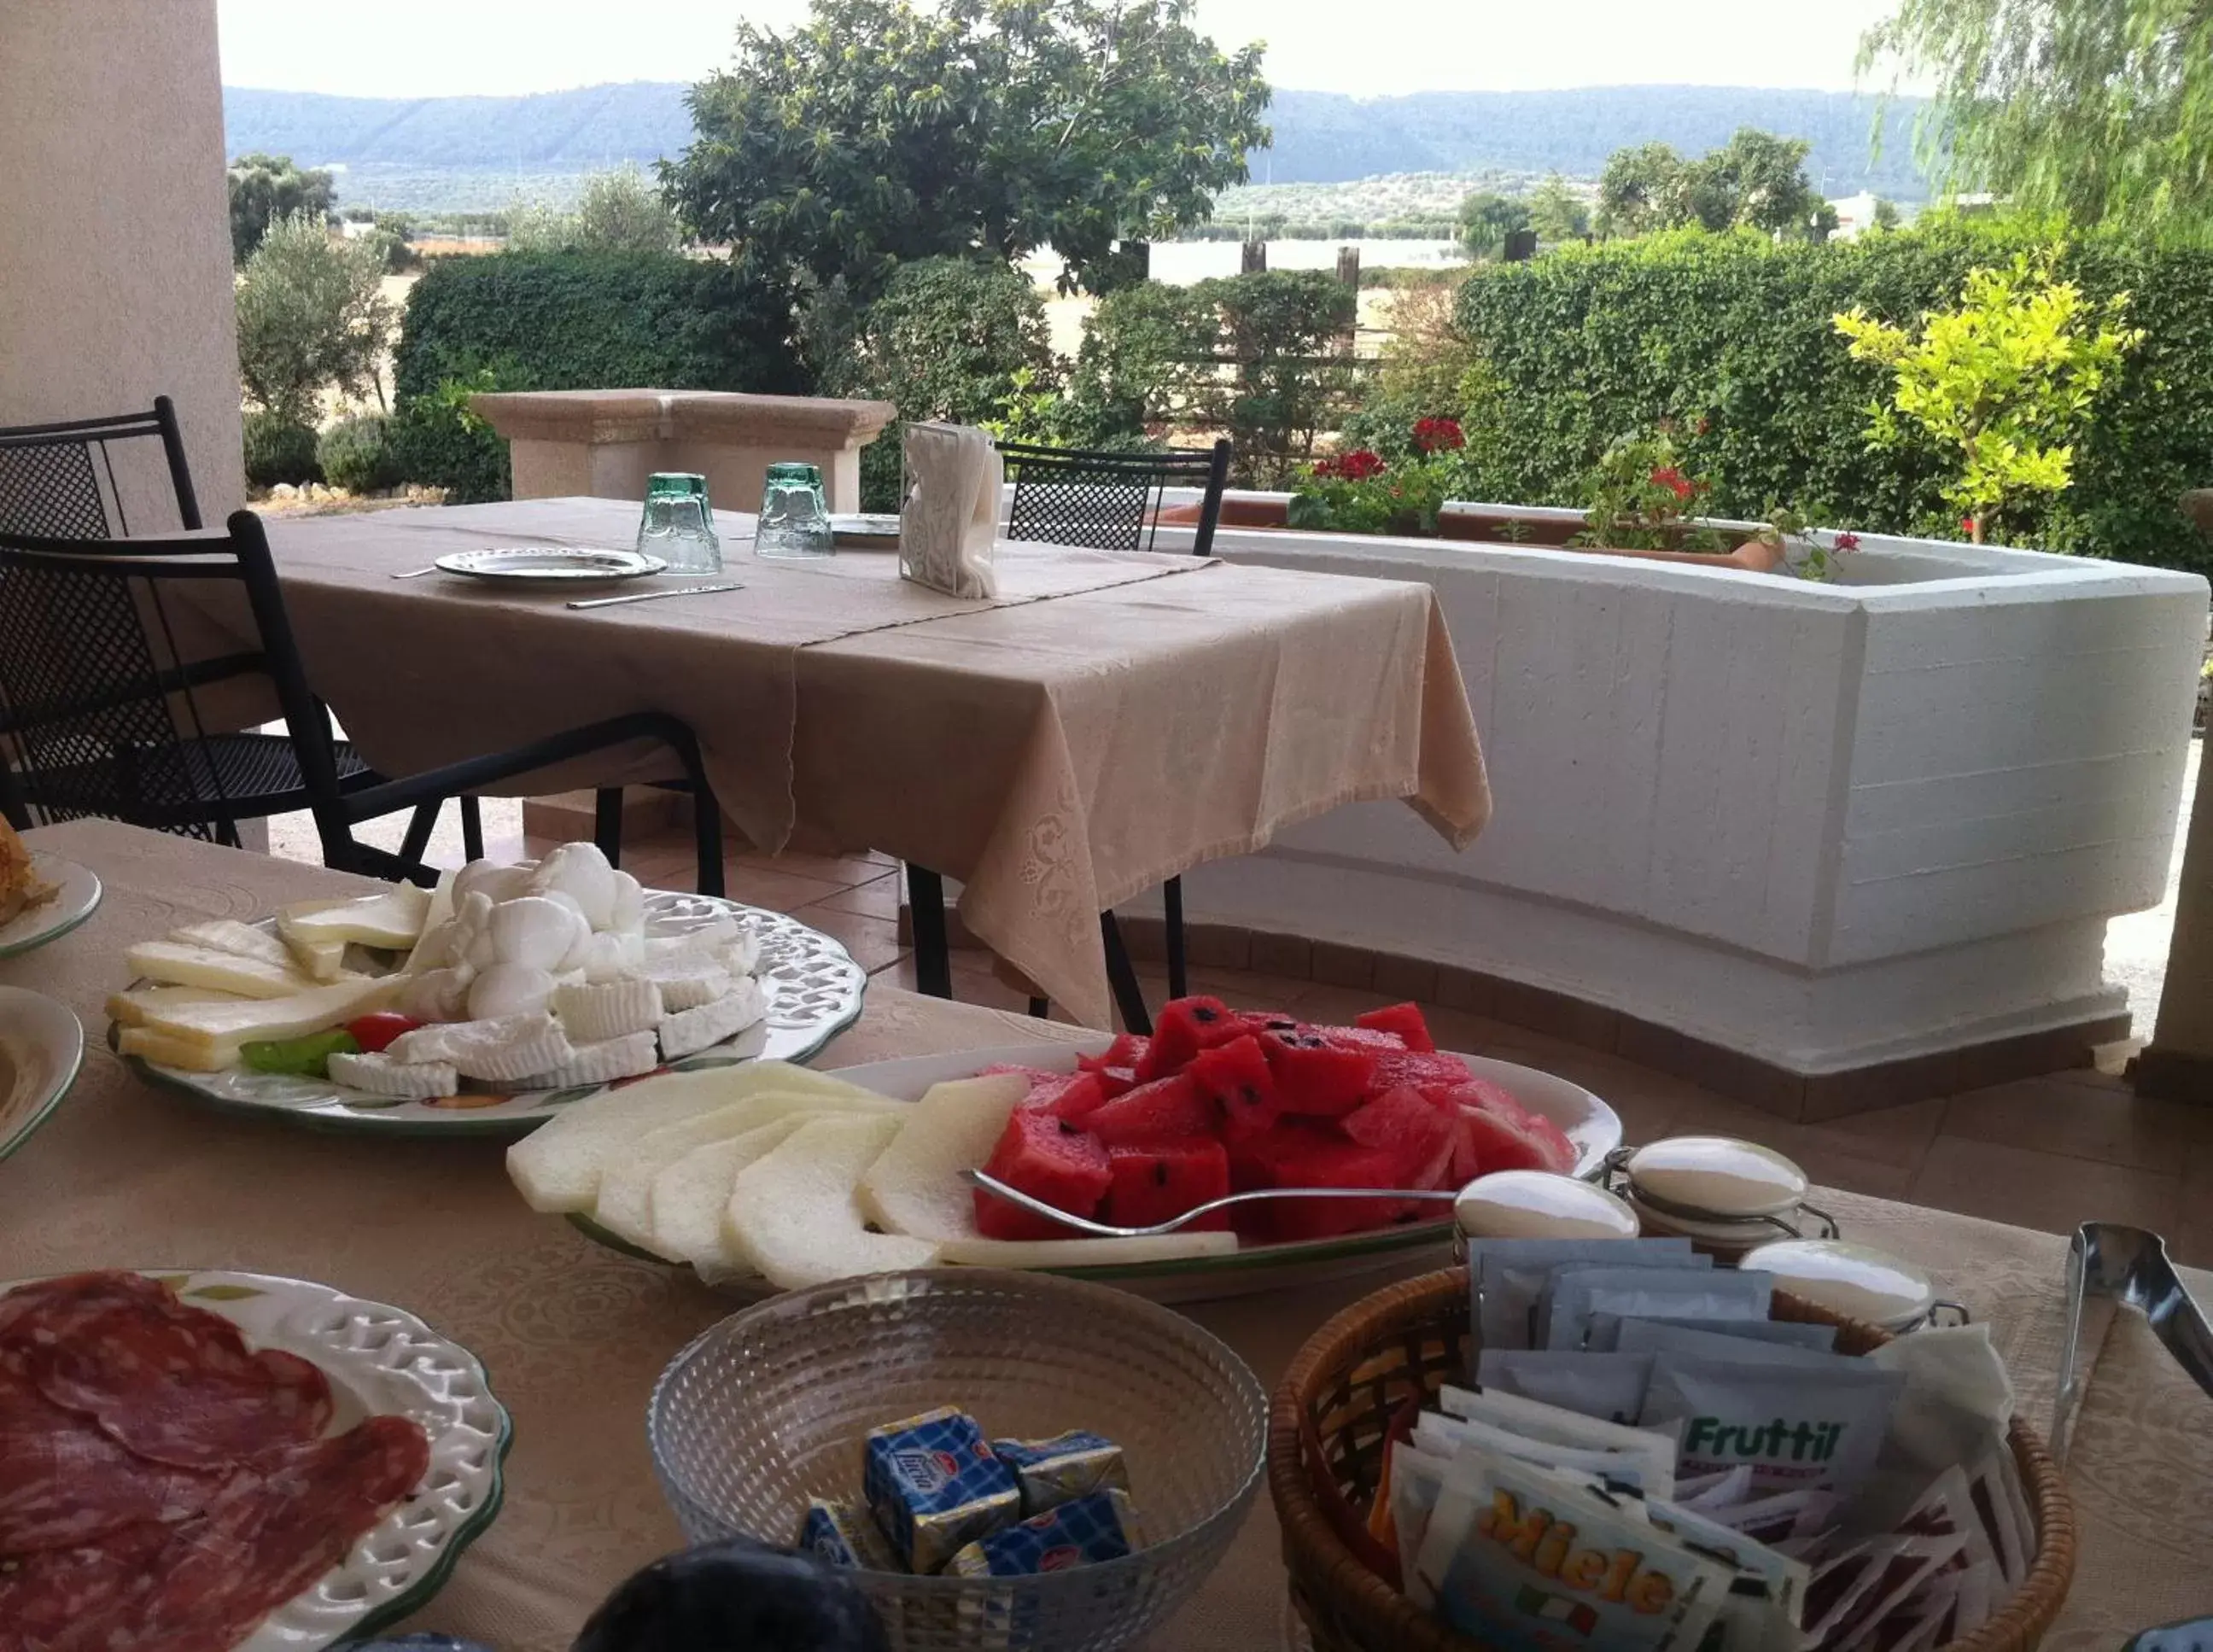 Food close-up in Villa Narducci